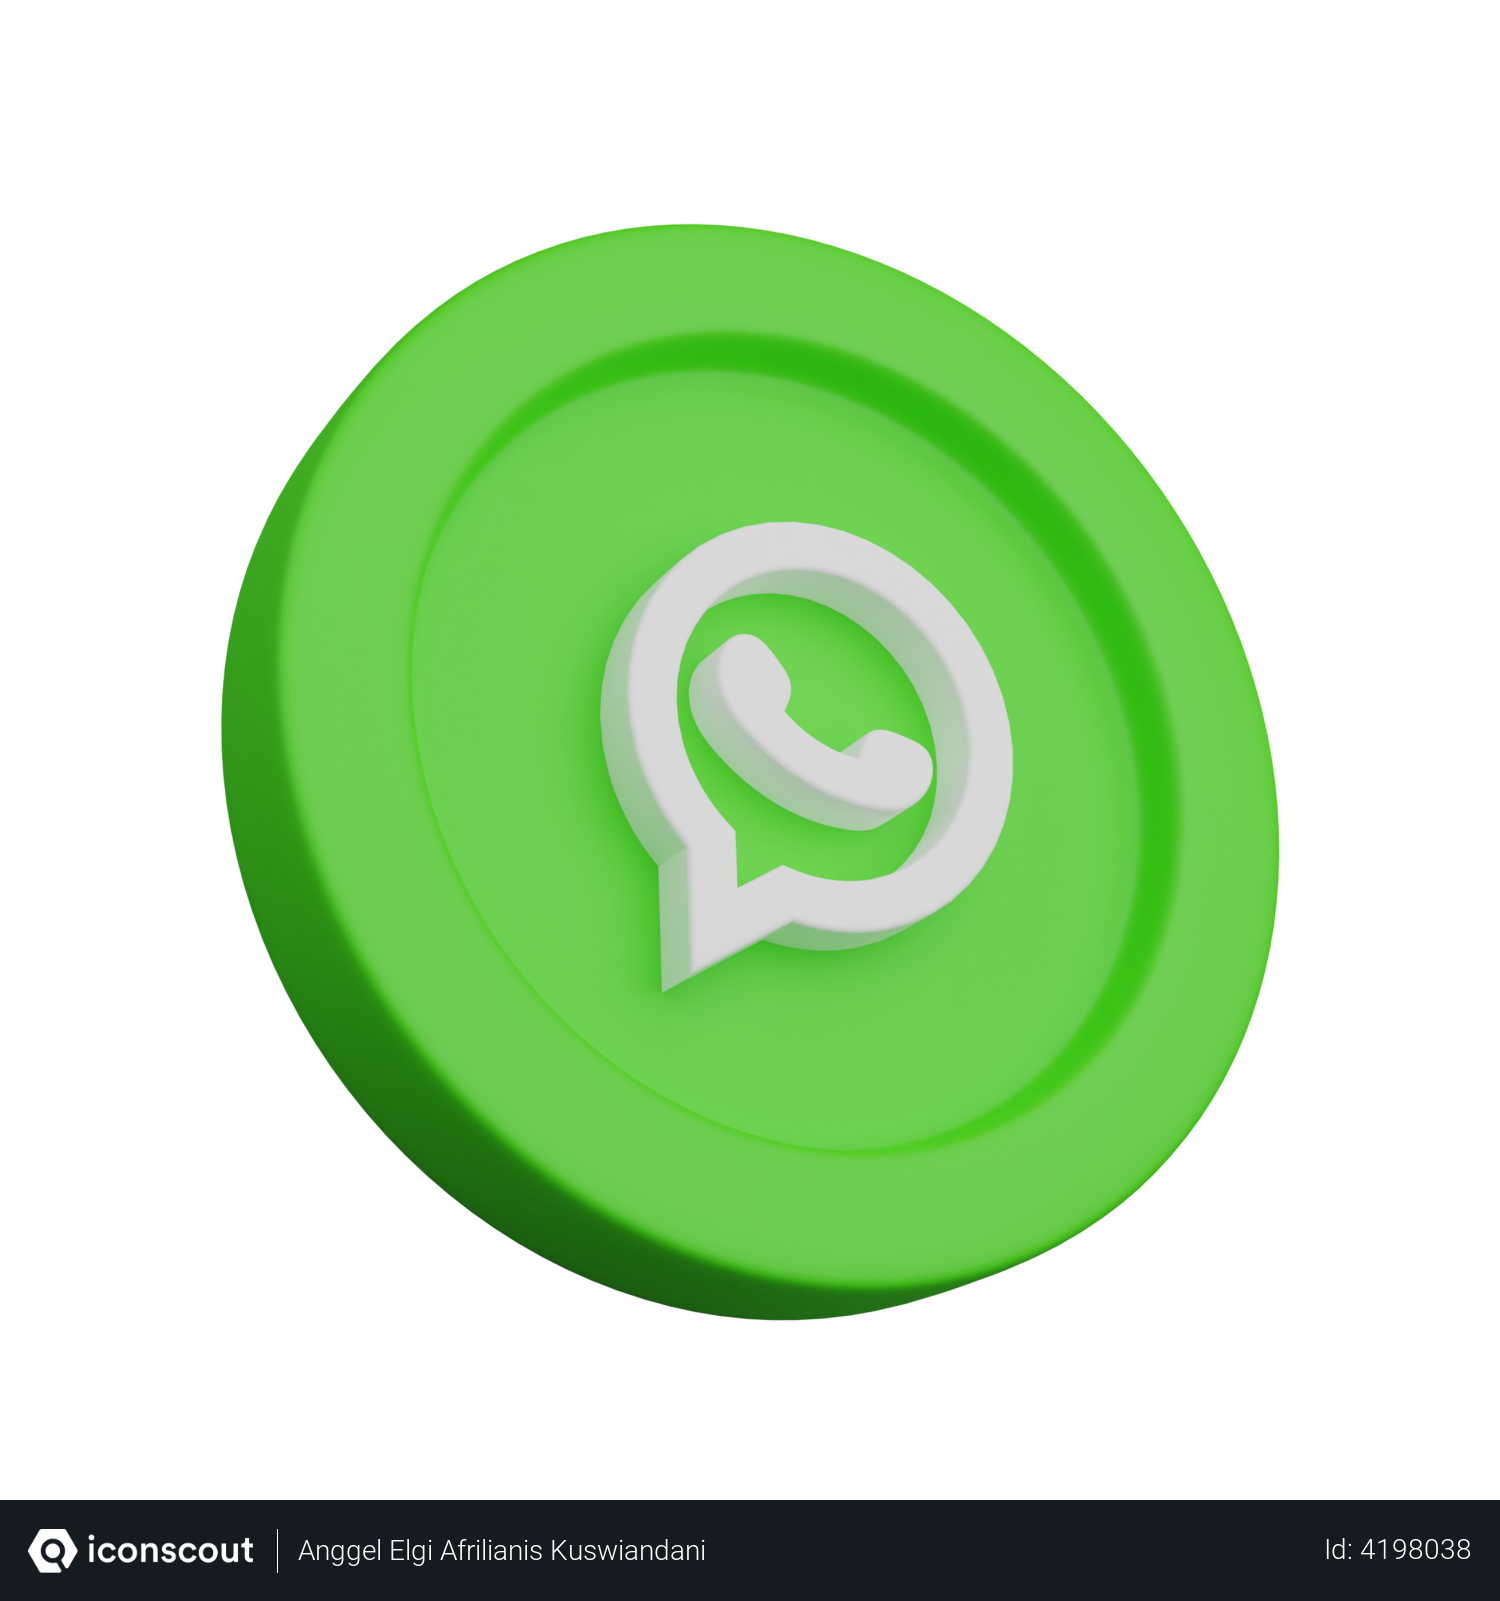 Whatsapp Status, whatsapp Logo, whatsapp Icon, windows Phone, Skype, viber,  whatsapp, message, theme, text Messaging | Anyrgb